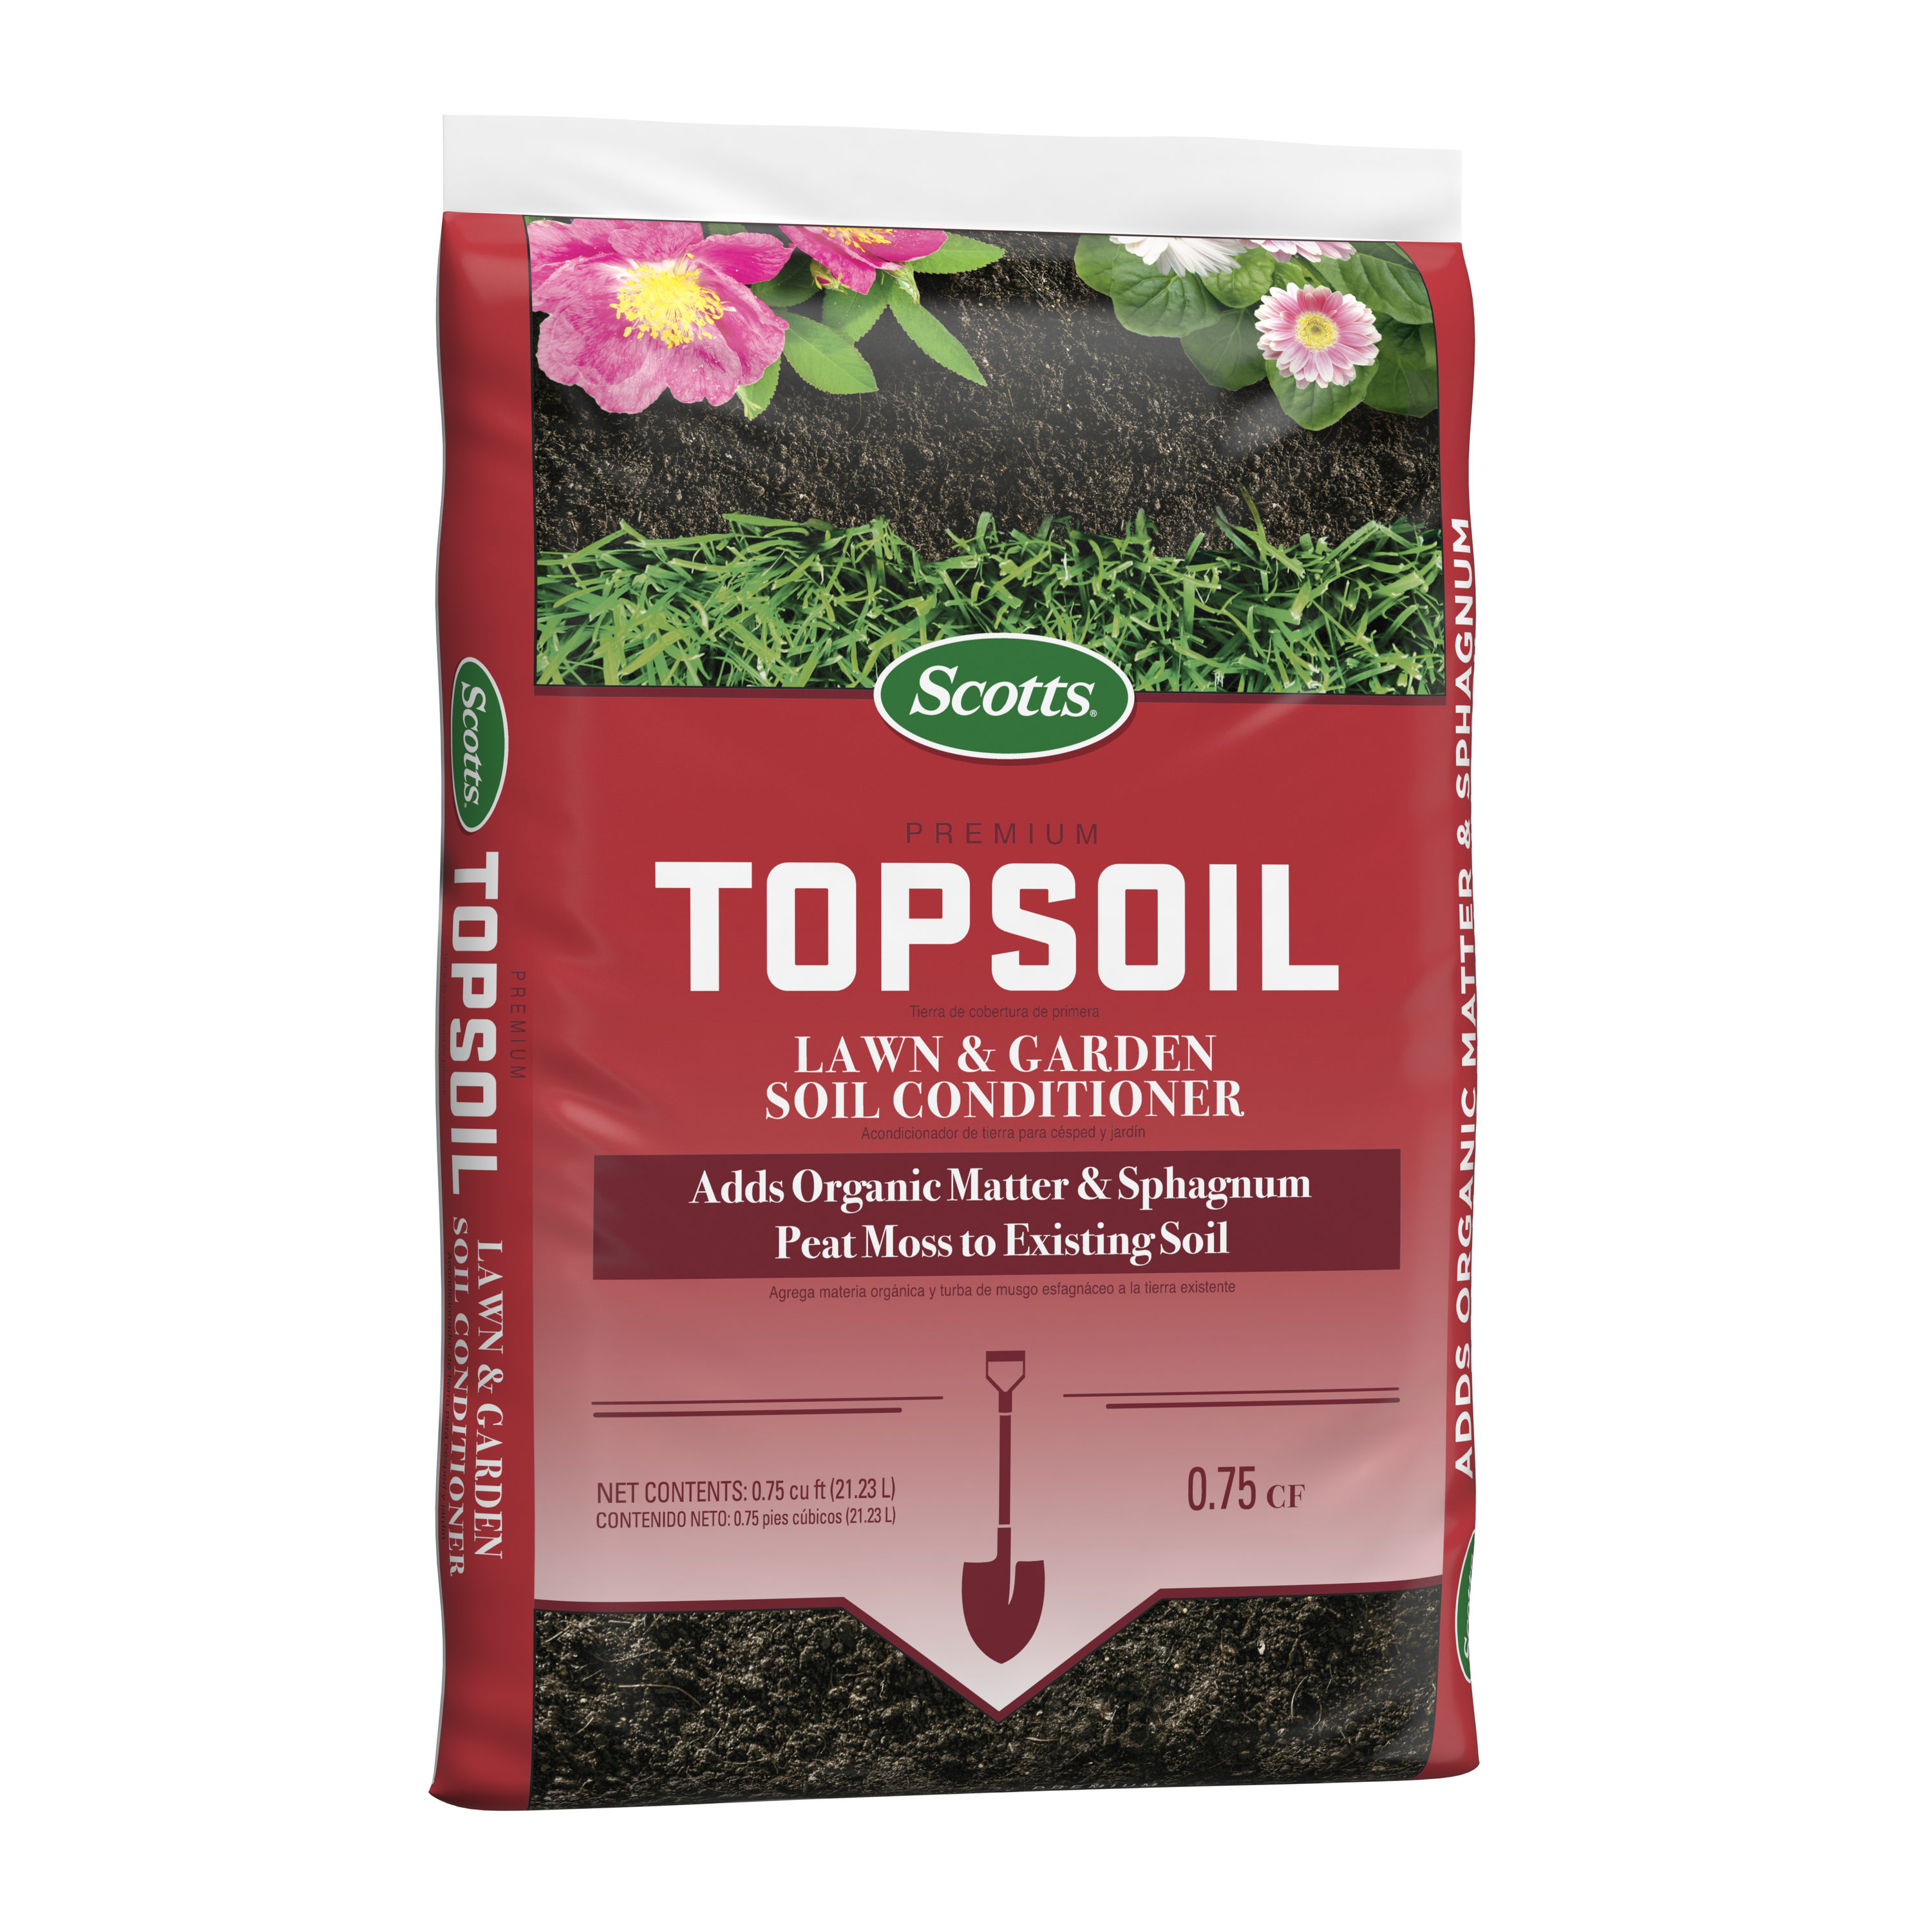 Image of Topsoil soil amendment at Lowe's